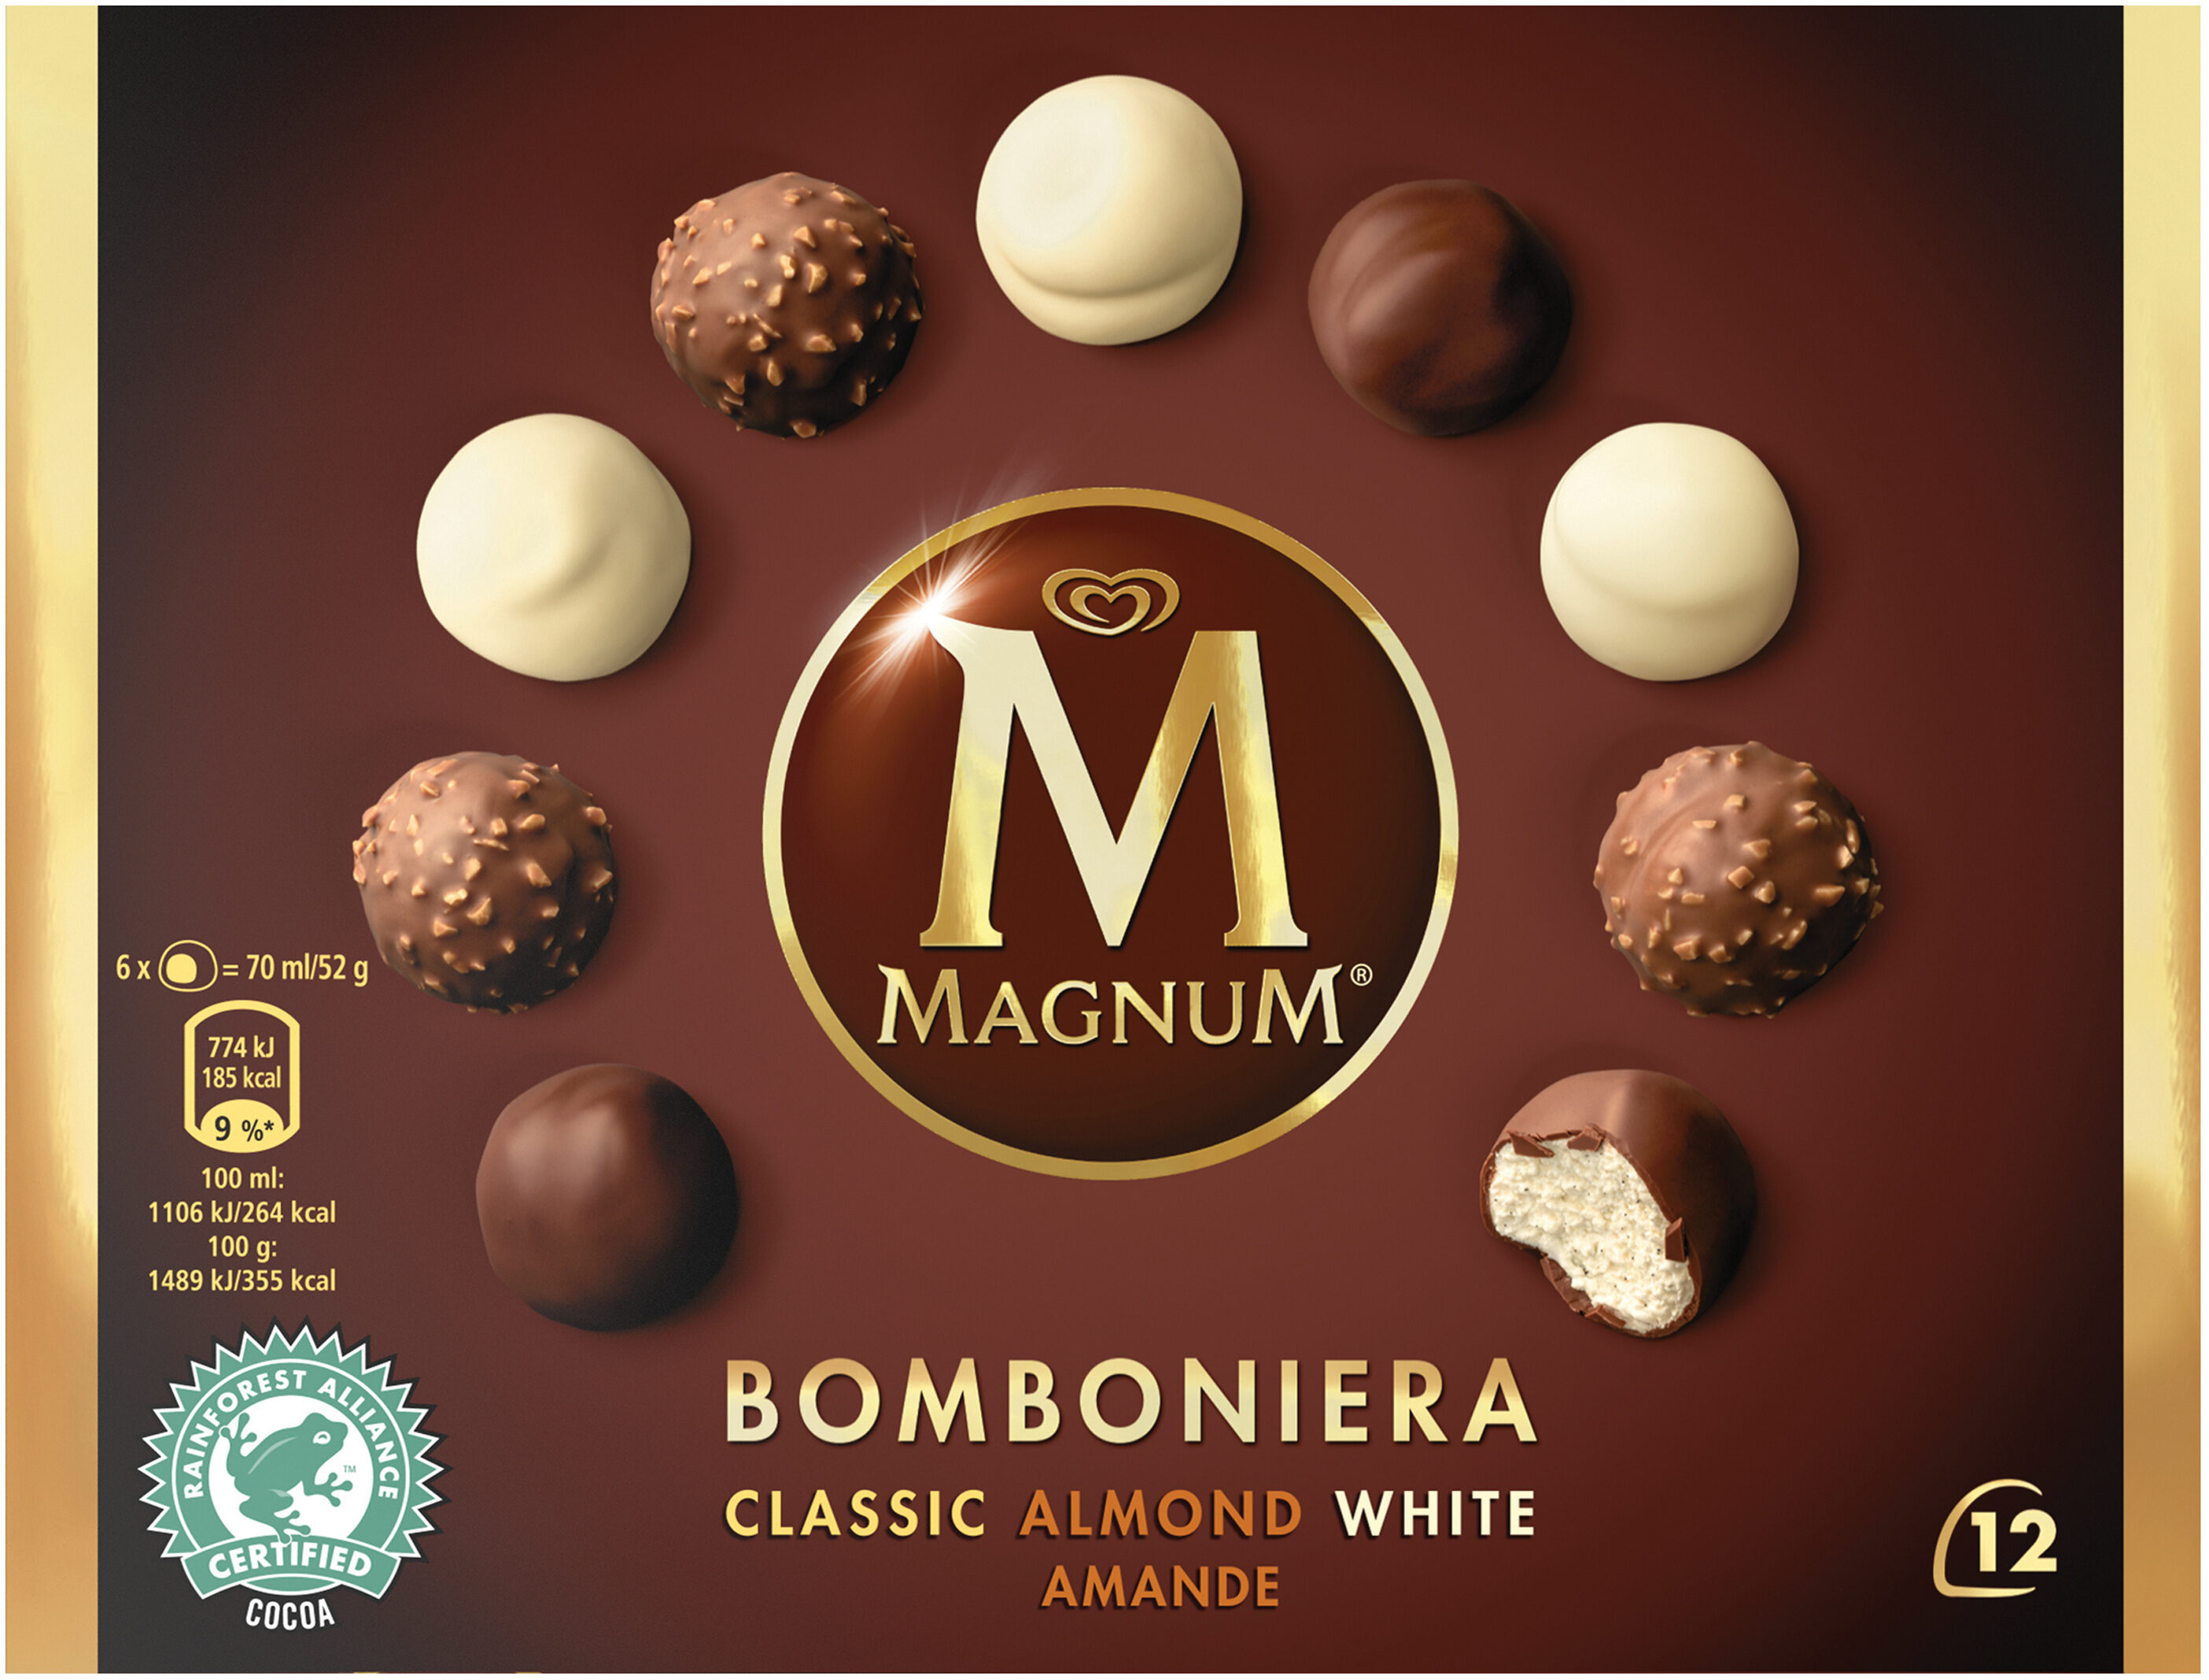 Bomboniera Classic Almond White - Produit